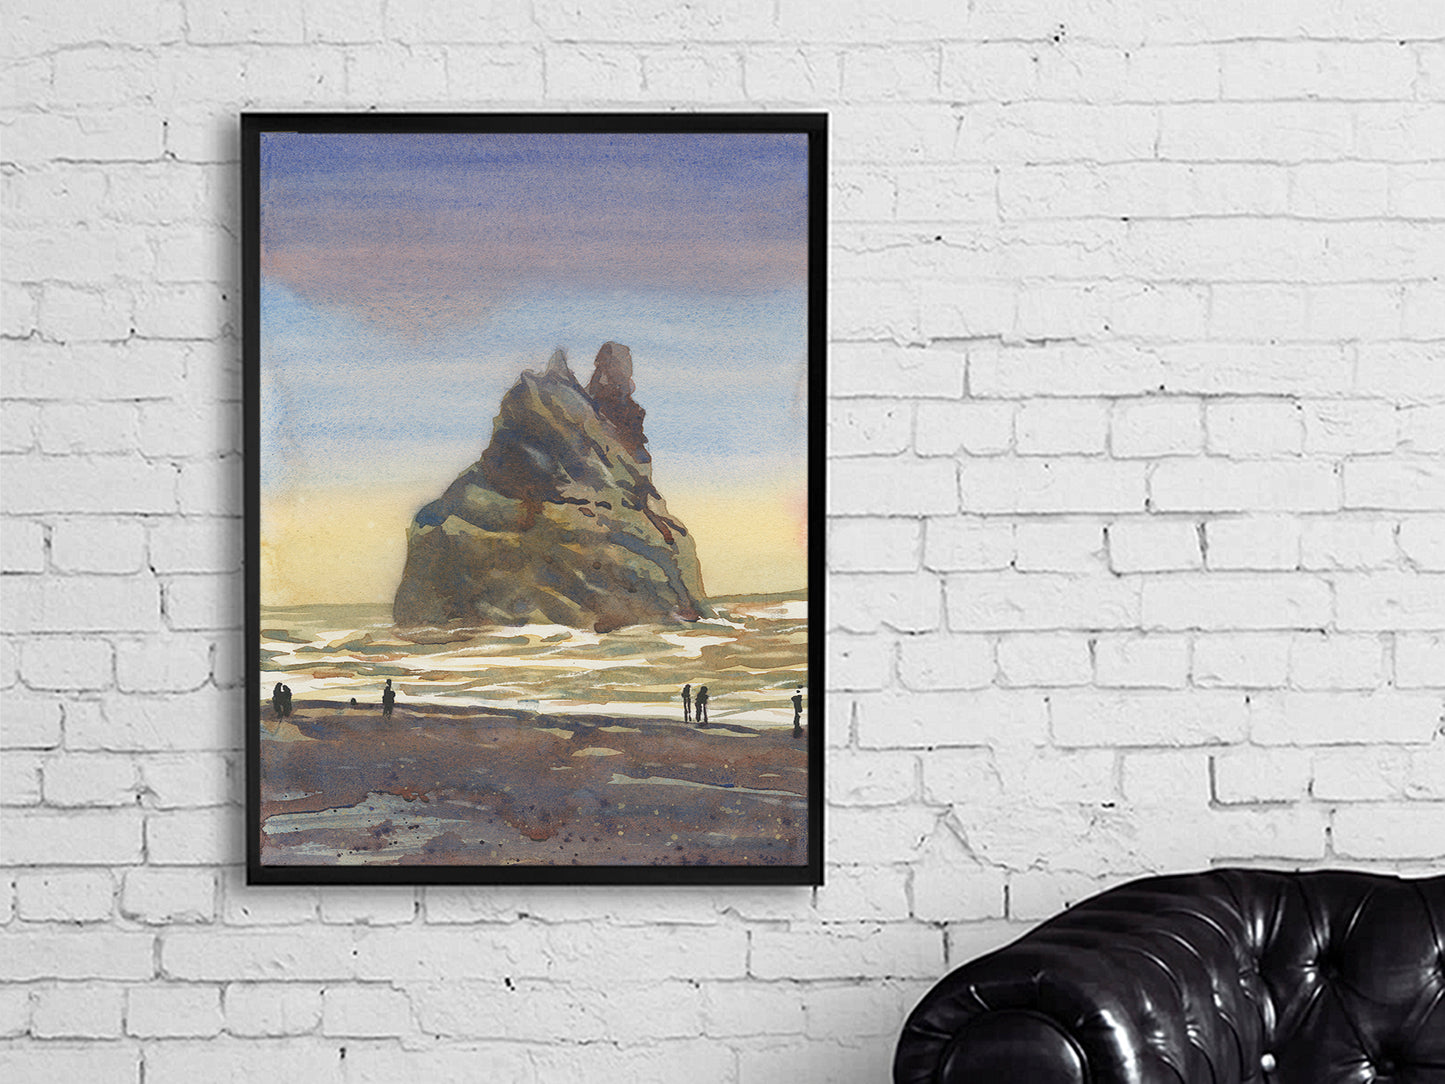 Iceland landscape painting Black Sand Beach near Vik colorful watercolor coastal art giclee (print)